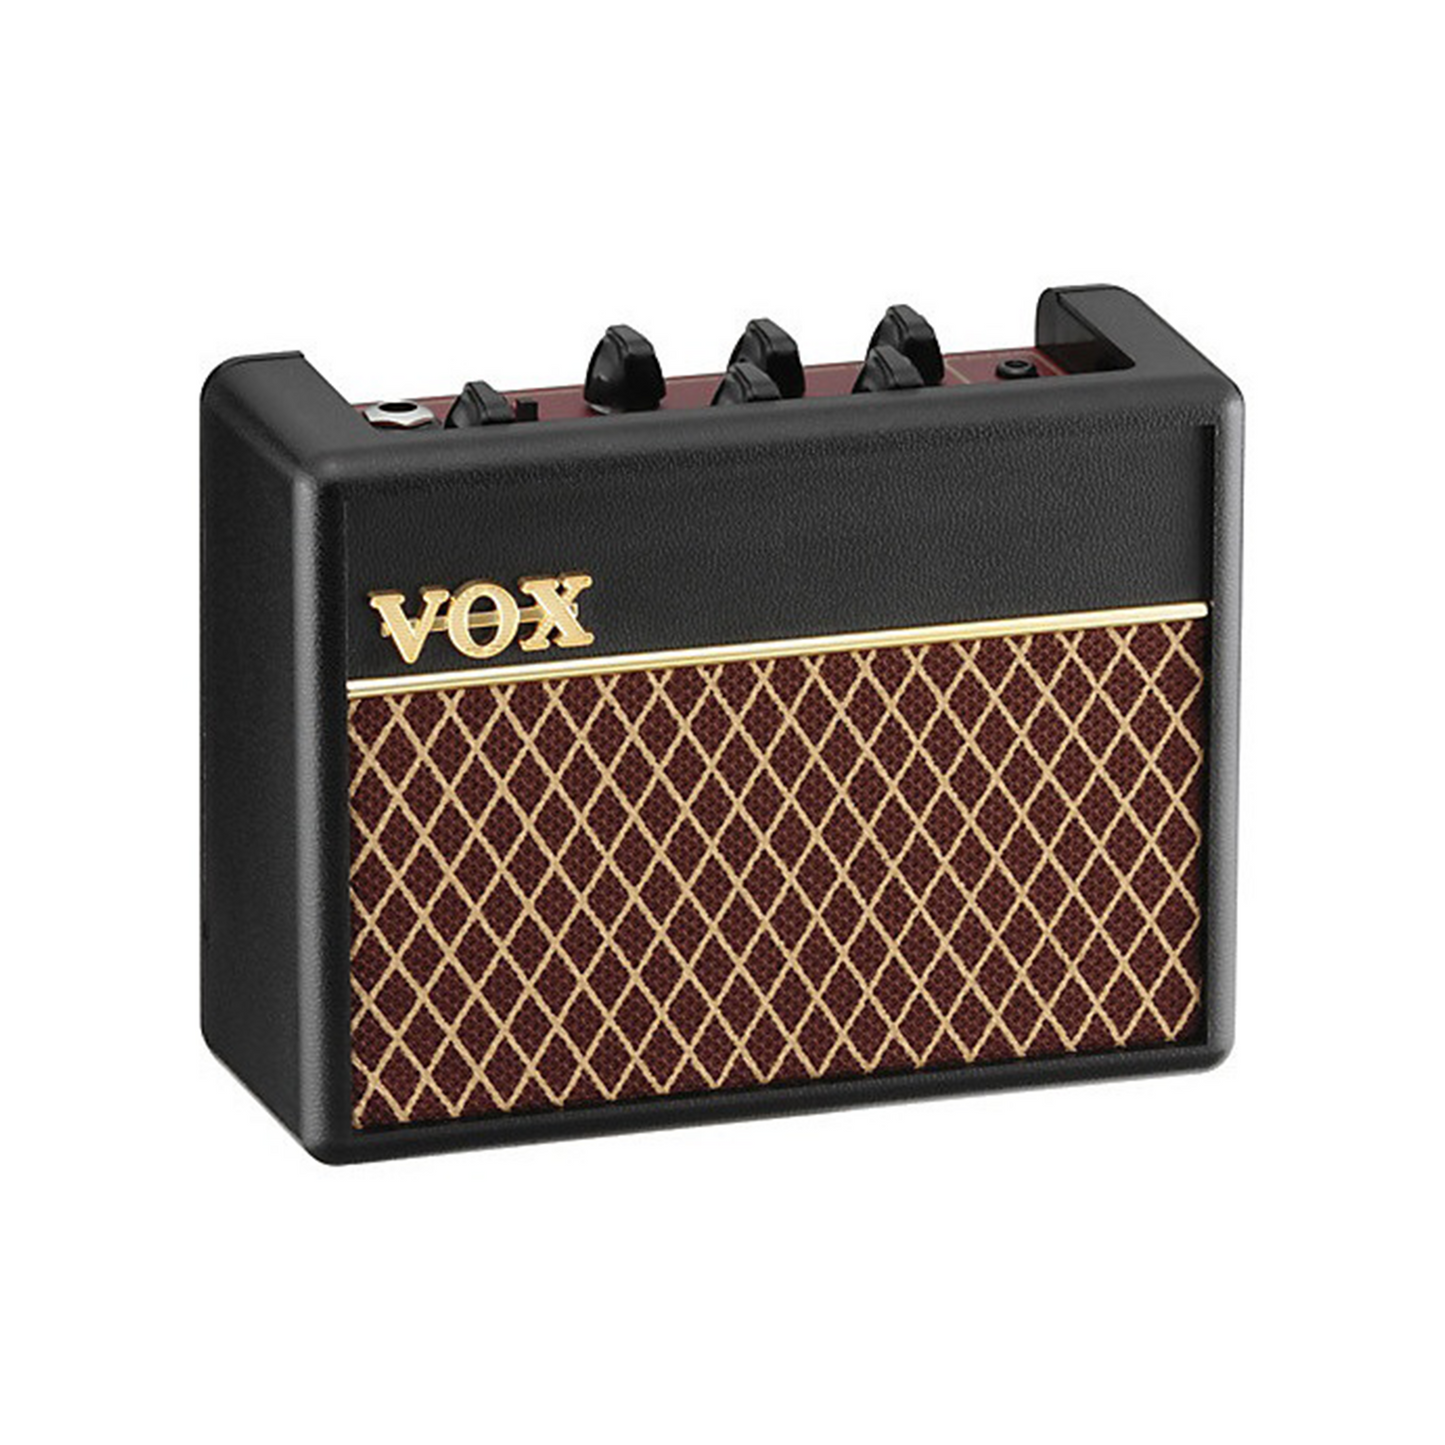 Vox AC1 Rhythm Vox